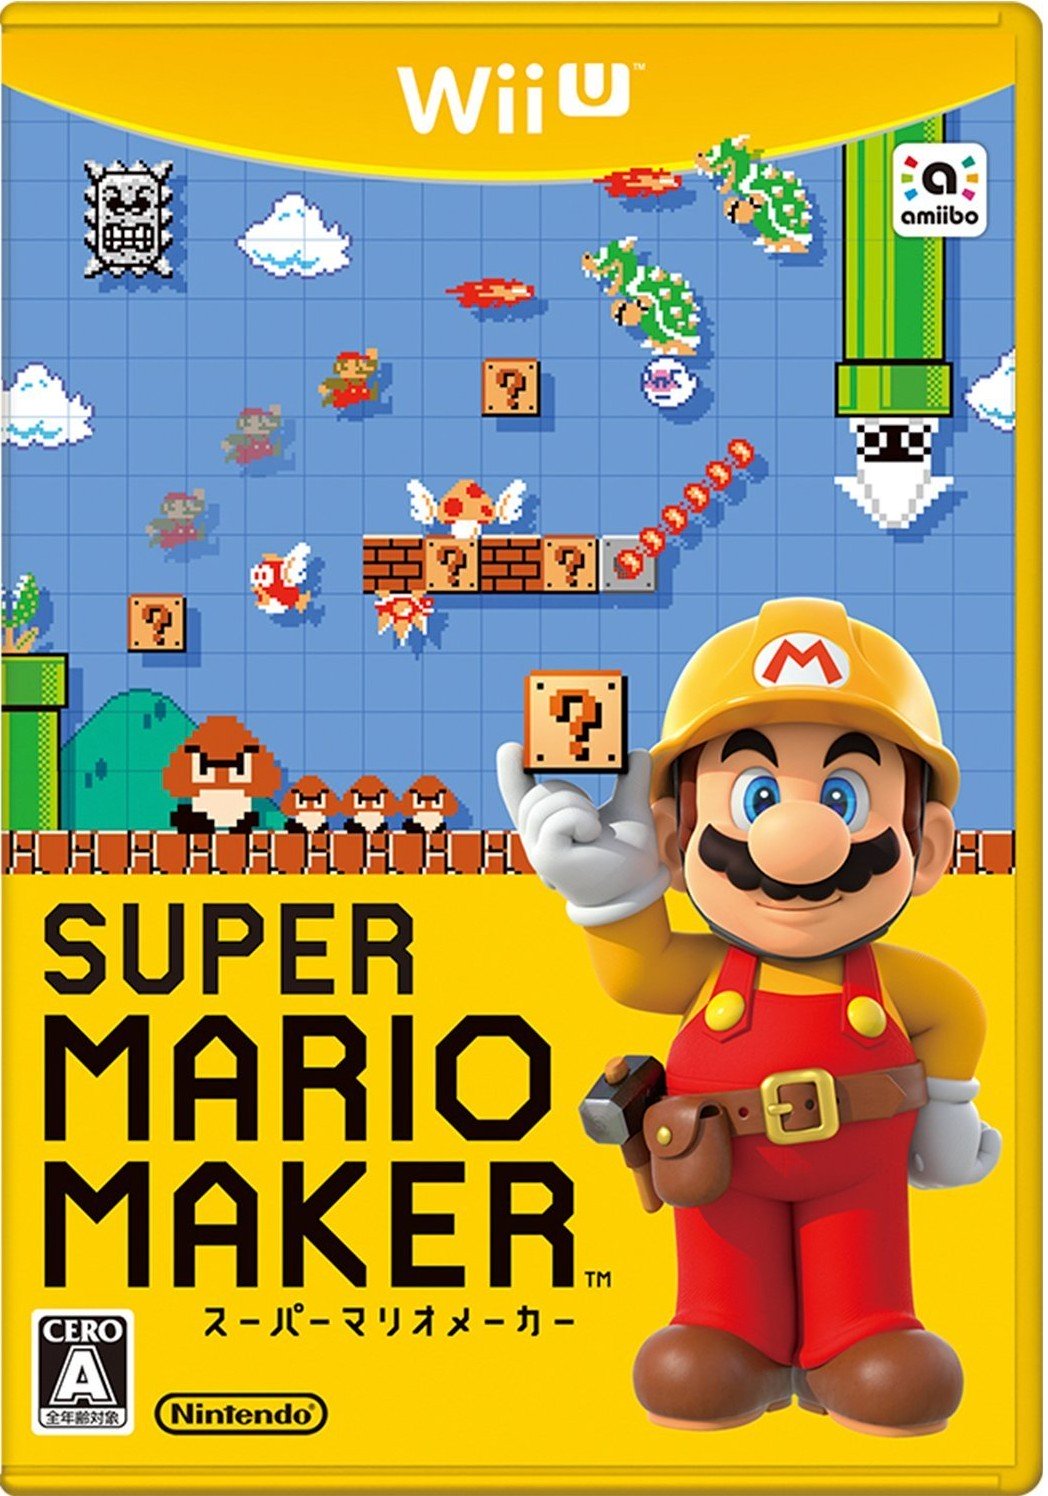 Wii U JP - Super Mario Maker.jpg